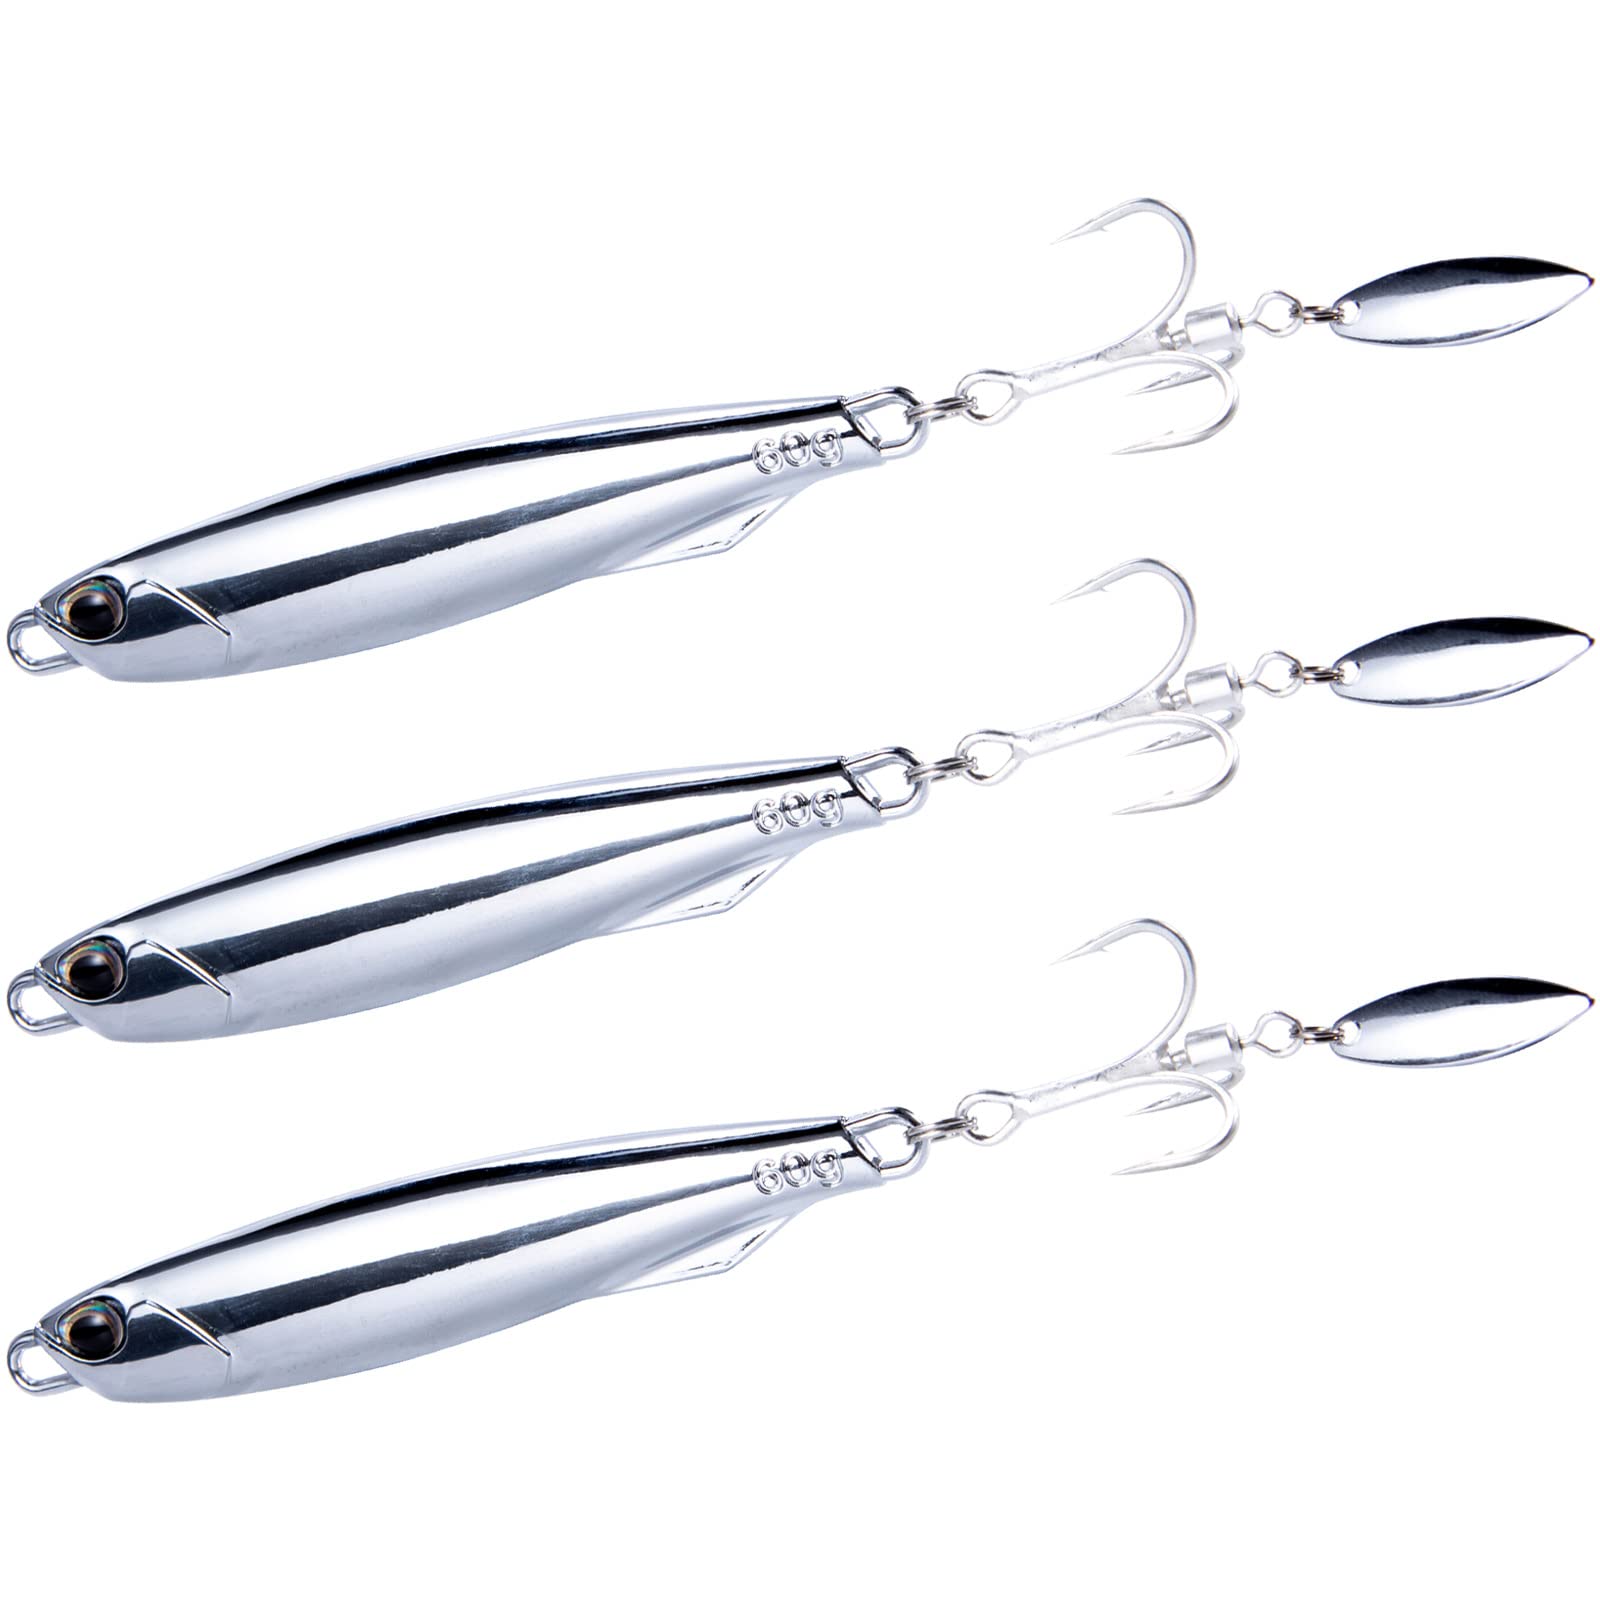 Dr.Fish 3 Pack Jigging Spoons Metal Casting Jigs Bladed Treble Hooks  Saltwater Casting Spoons Surf